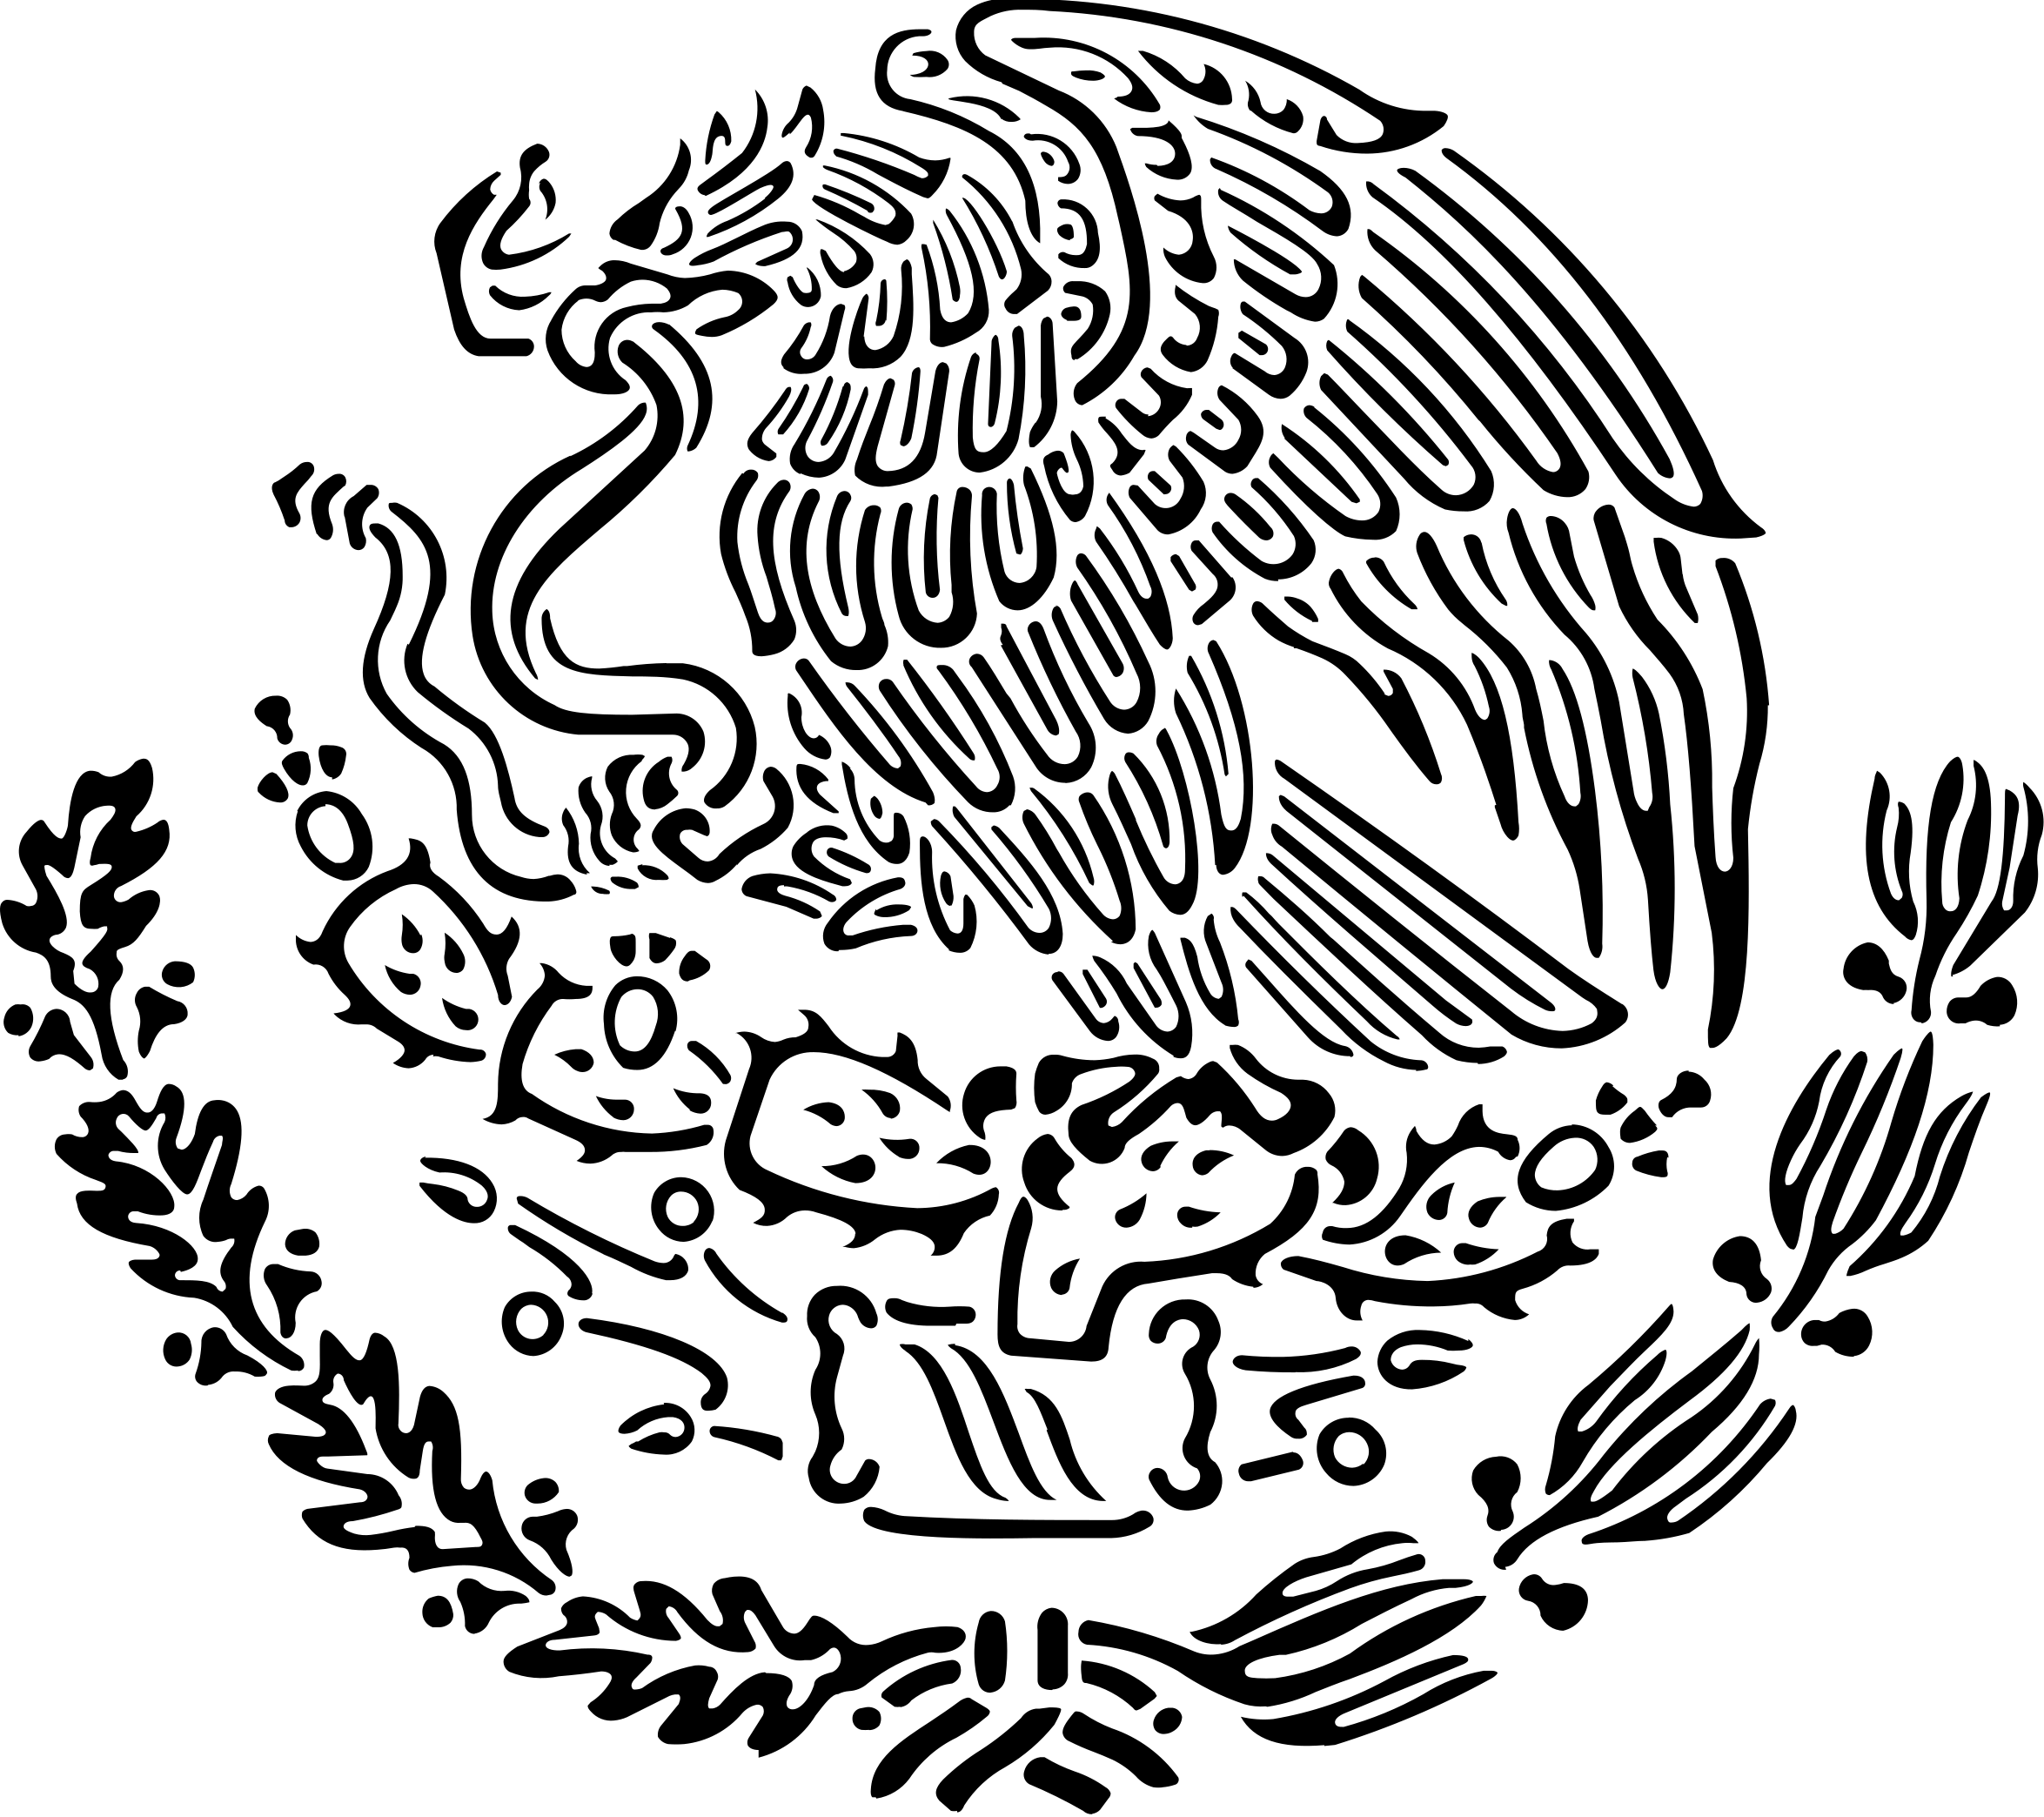 File:Draw-1-black-line.svg - Wikipedia